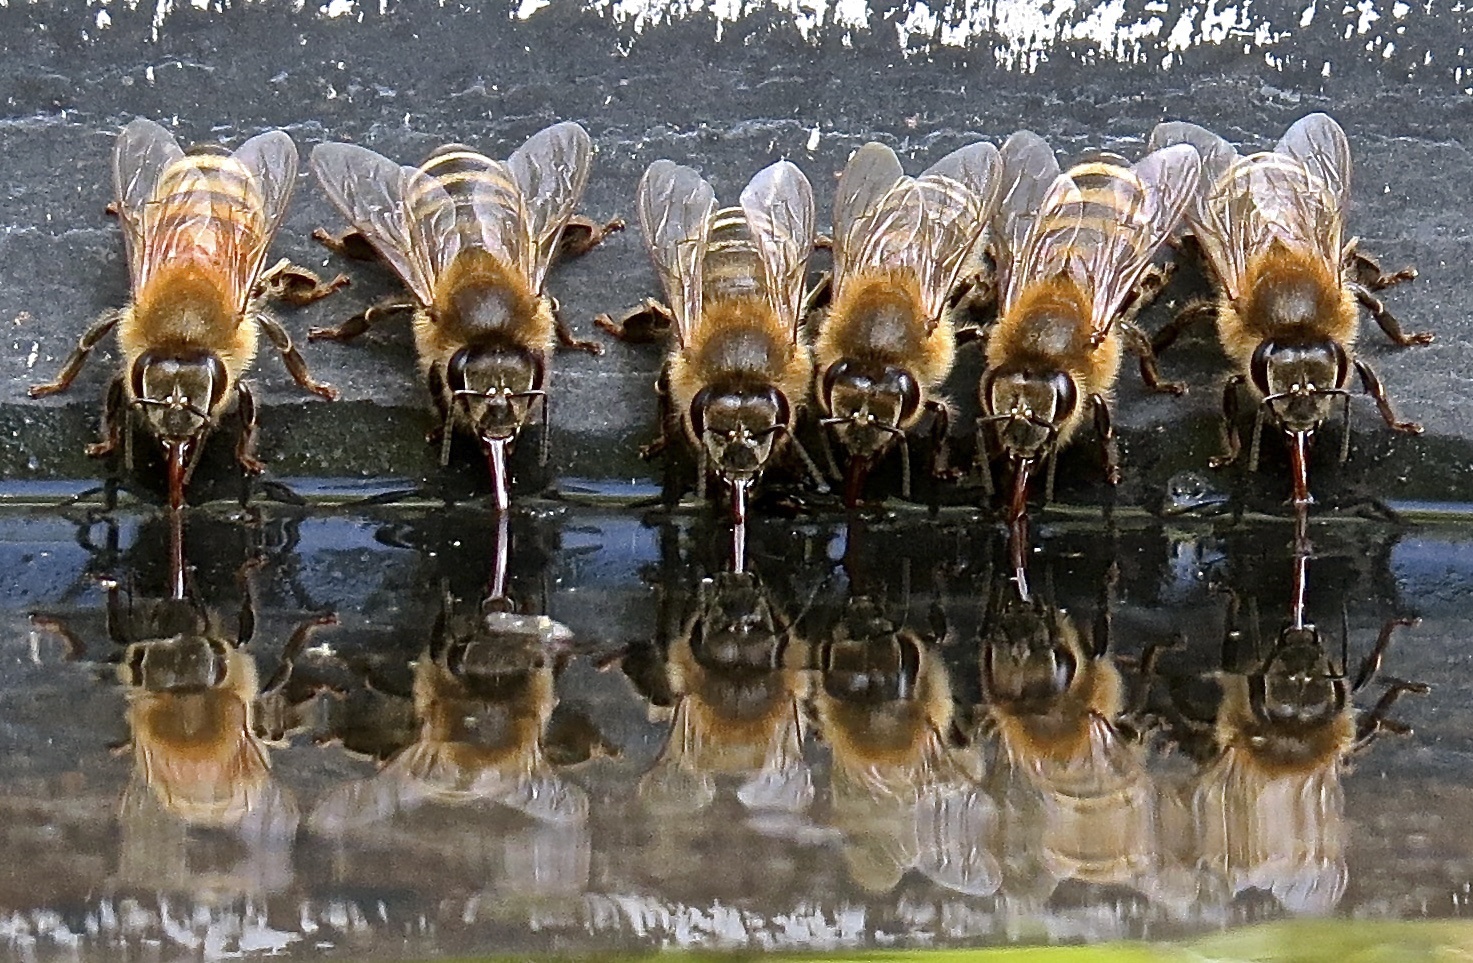 Honeybees drinking photo by Kathy Noteboom